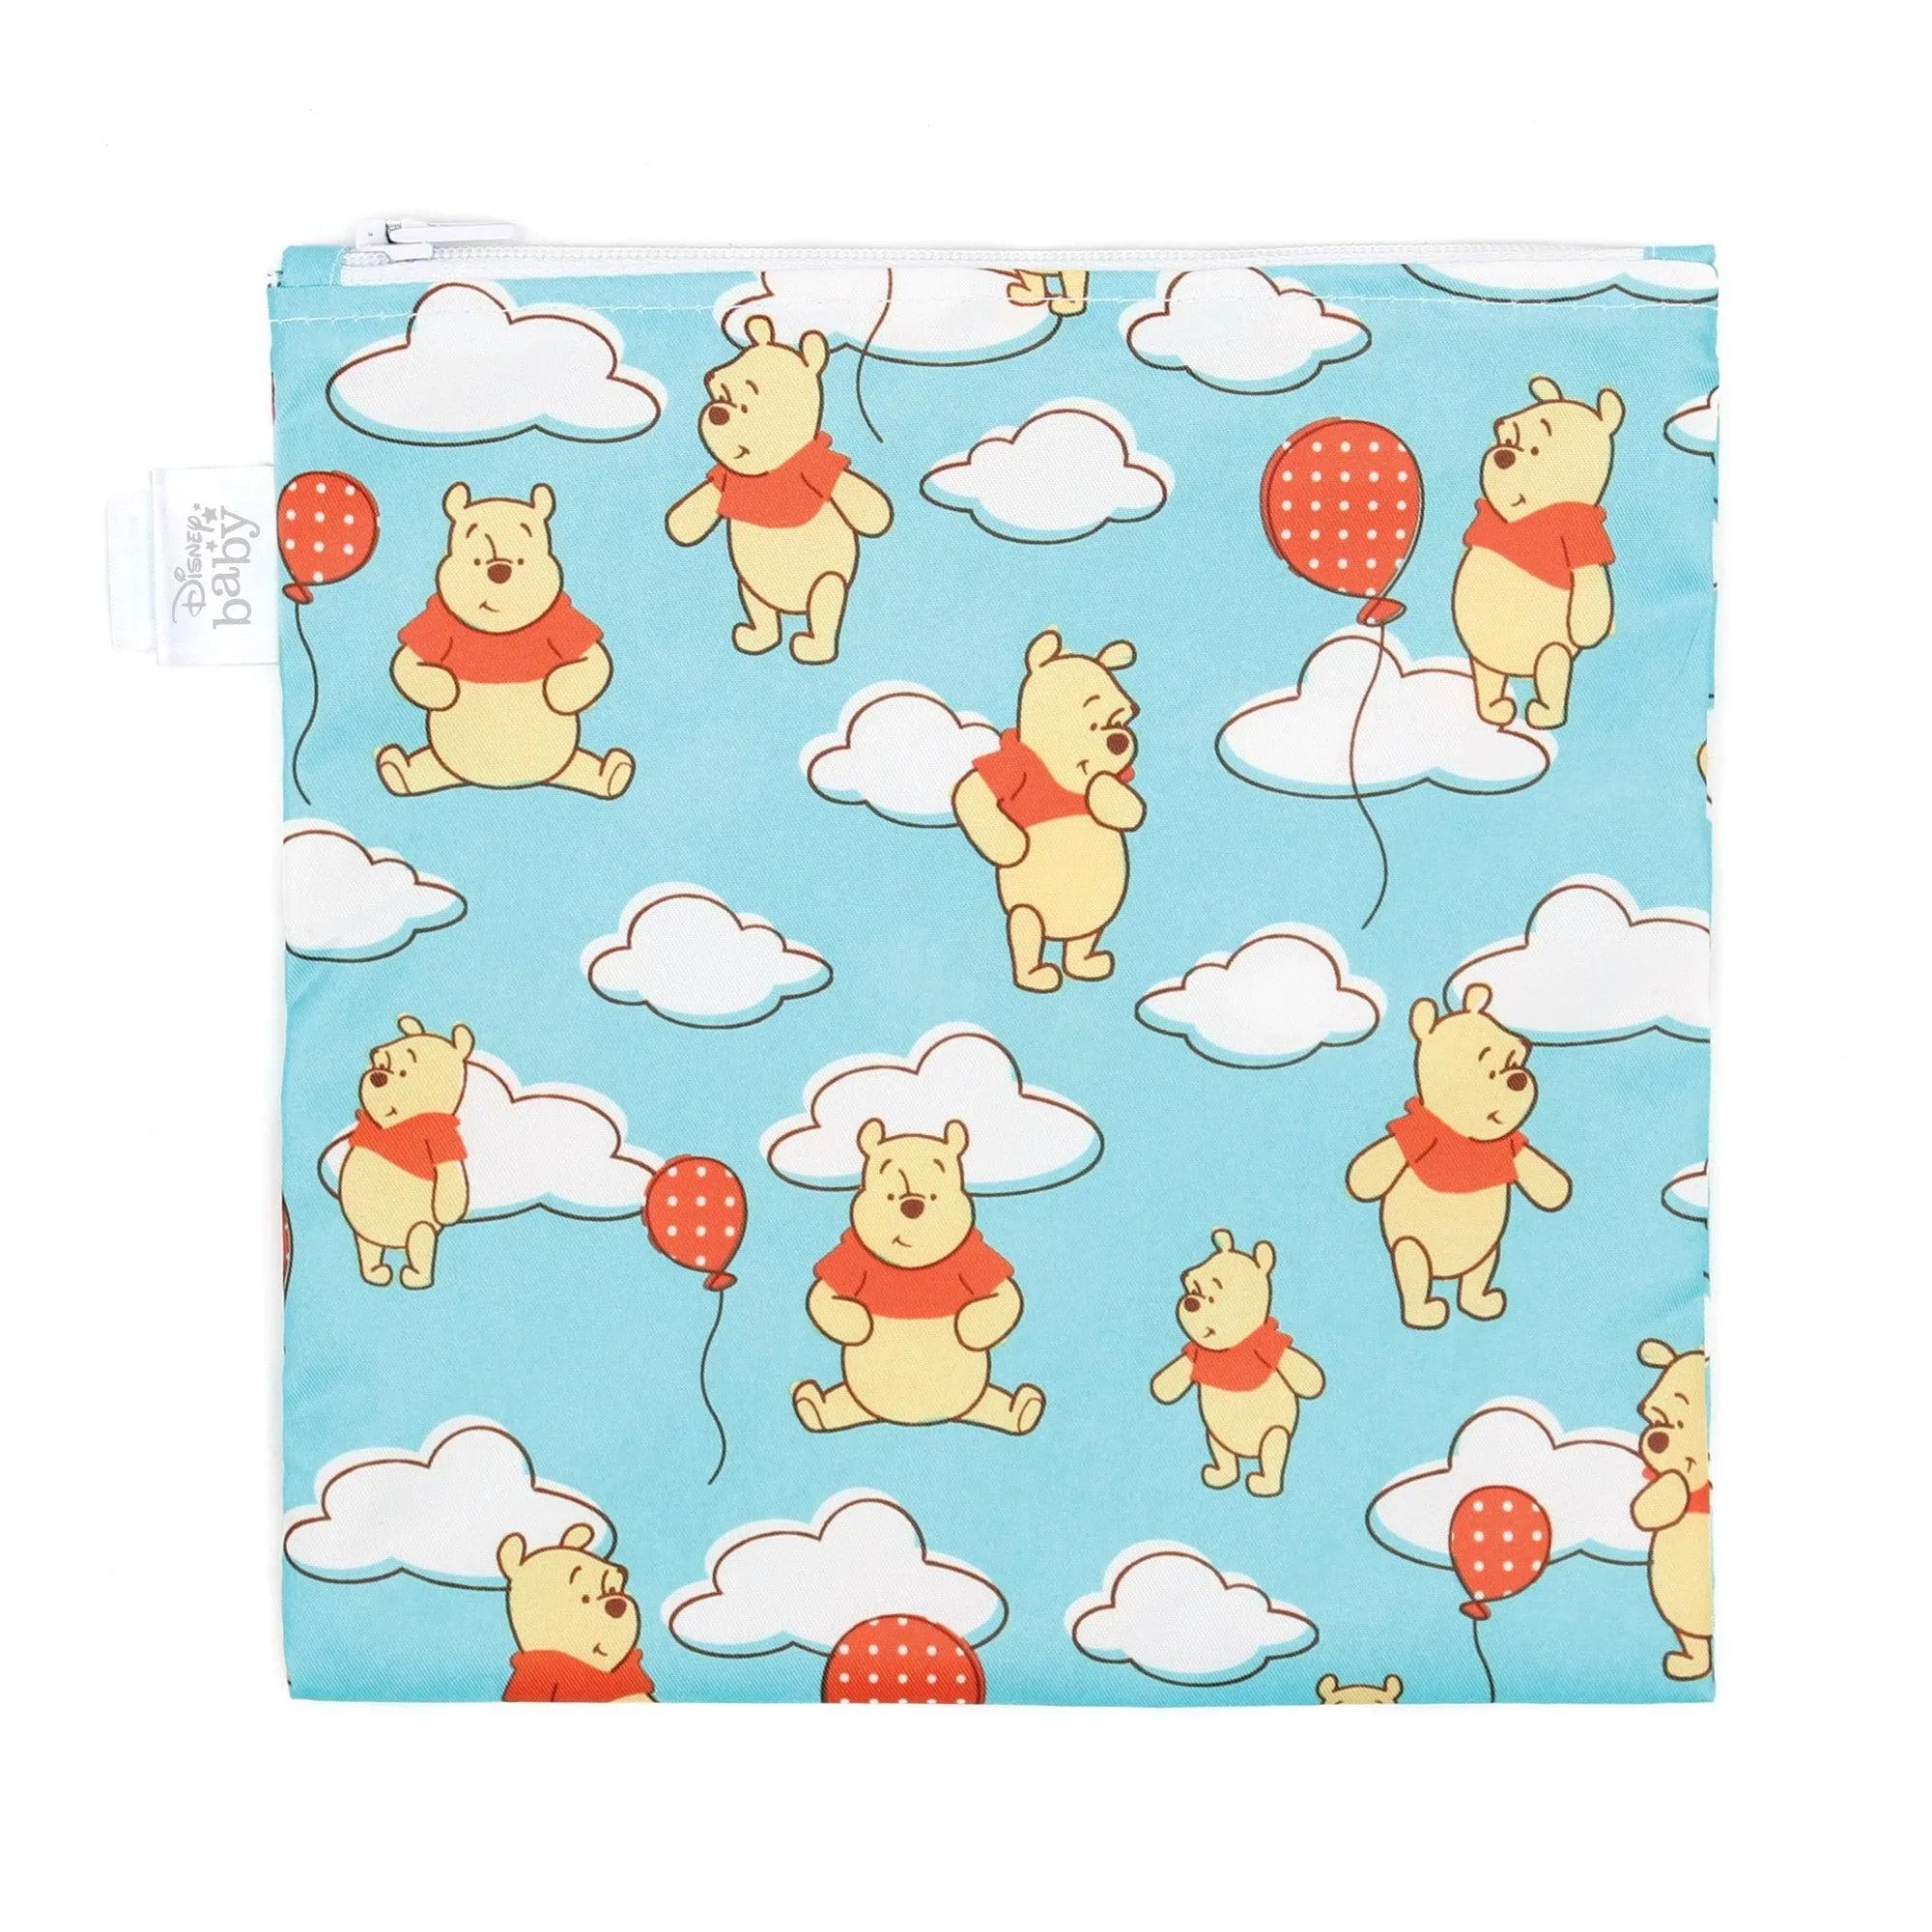 Disney Winnie Pooh Kitchen Towels 3-Pack Gray & Red